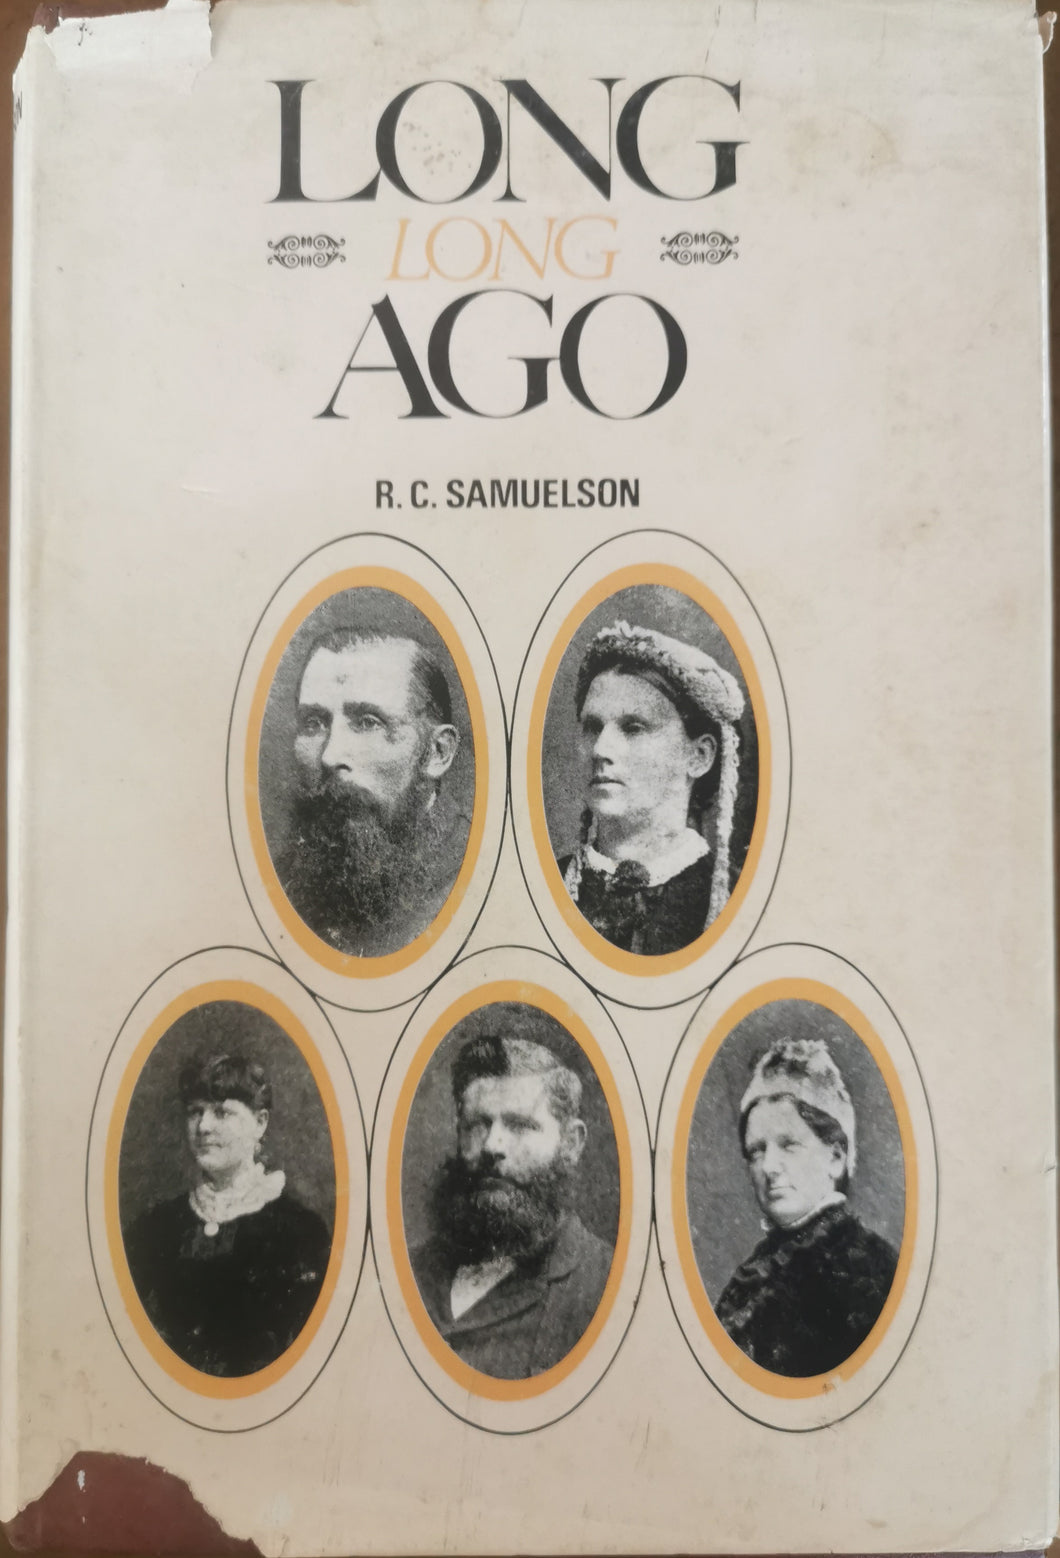 Long Long Ago - R.C. Samuelson